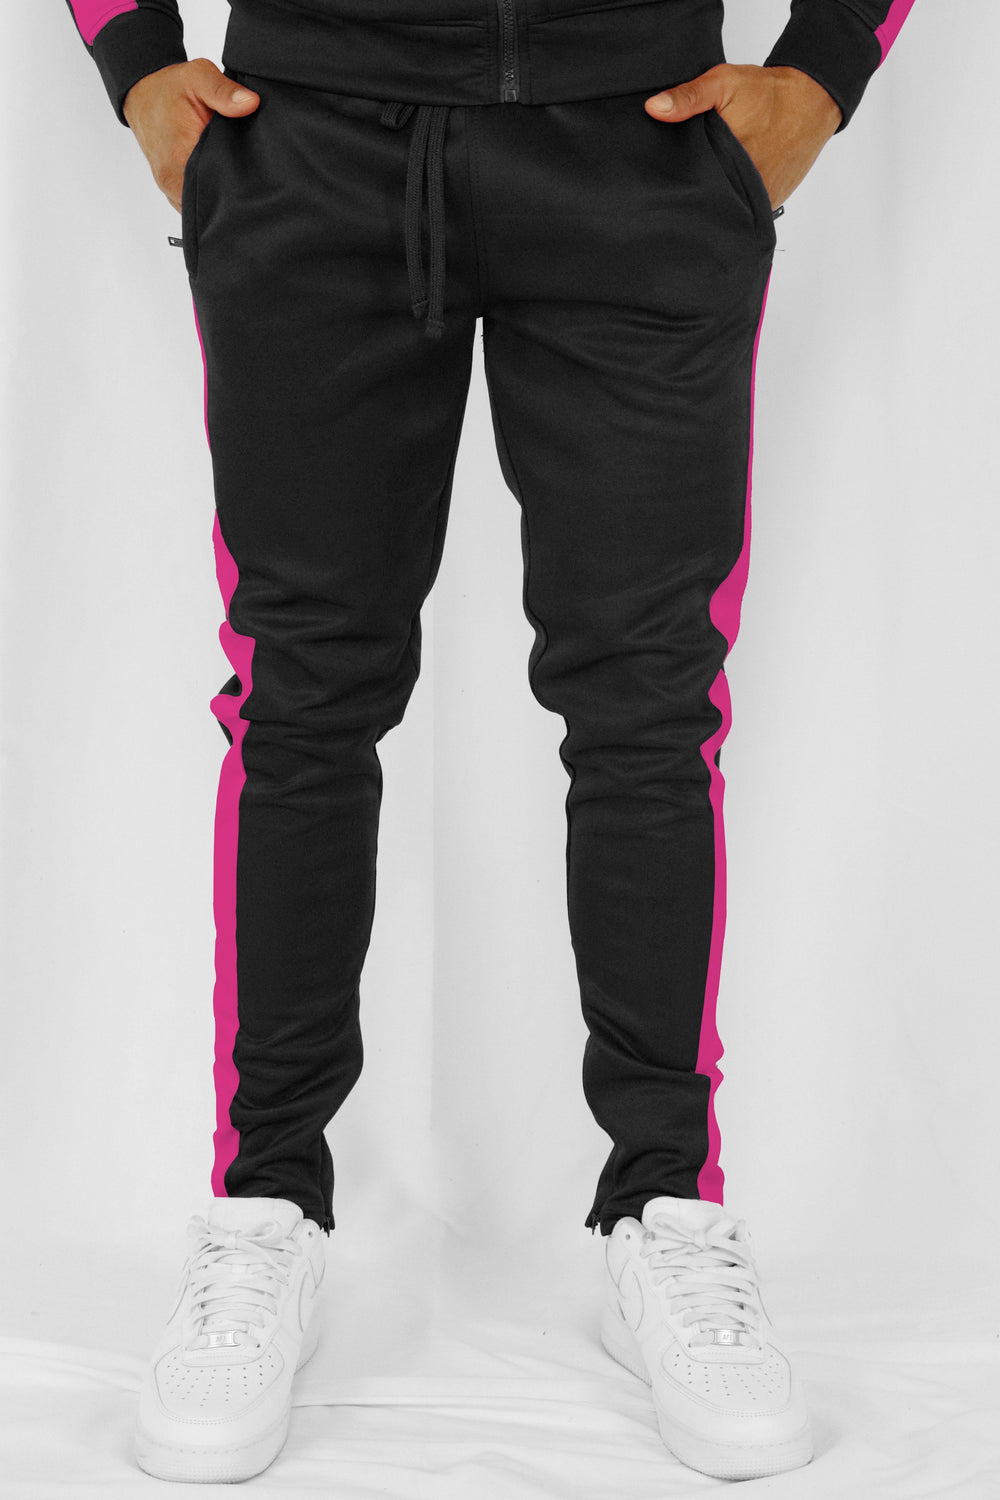 Outside Solid One Stripe Track Pants (Black - Hot Pink) - Zamage